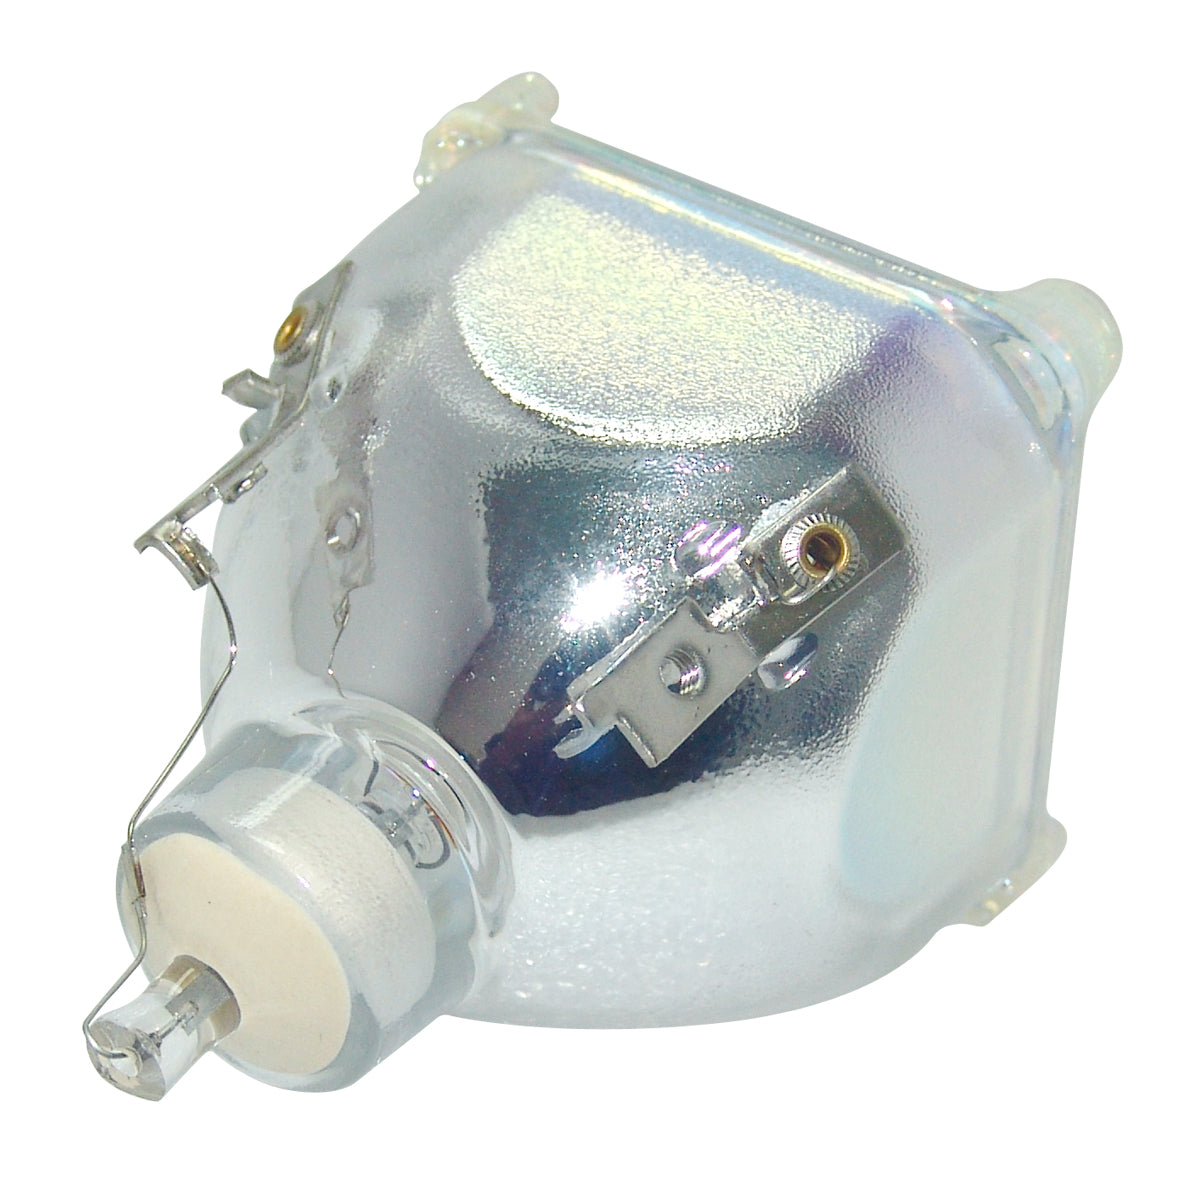 Dukane 456-229-1 Osram Projector Bare Lamp